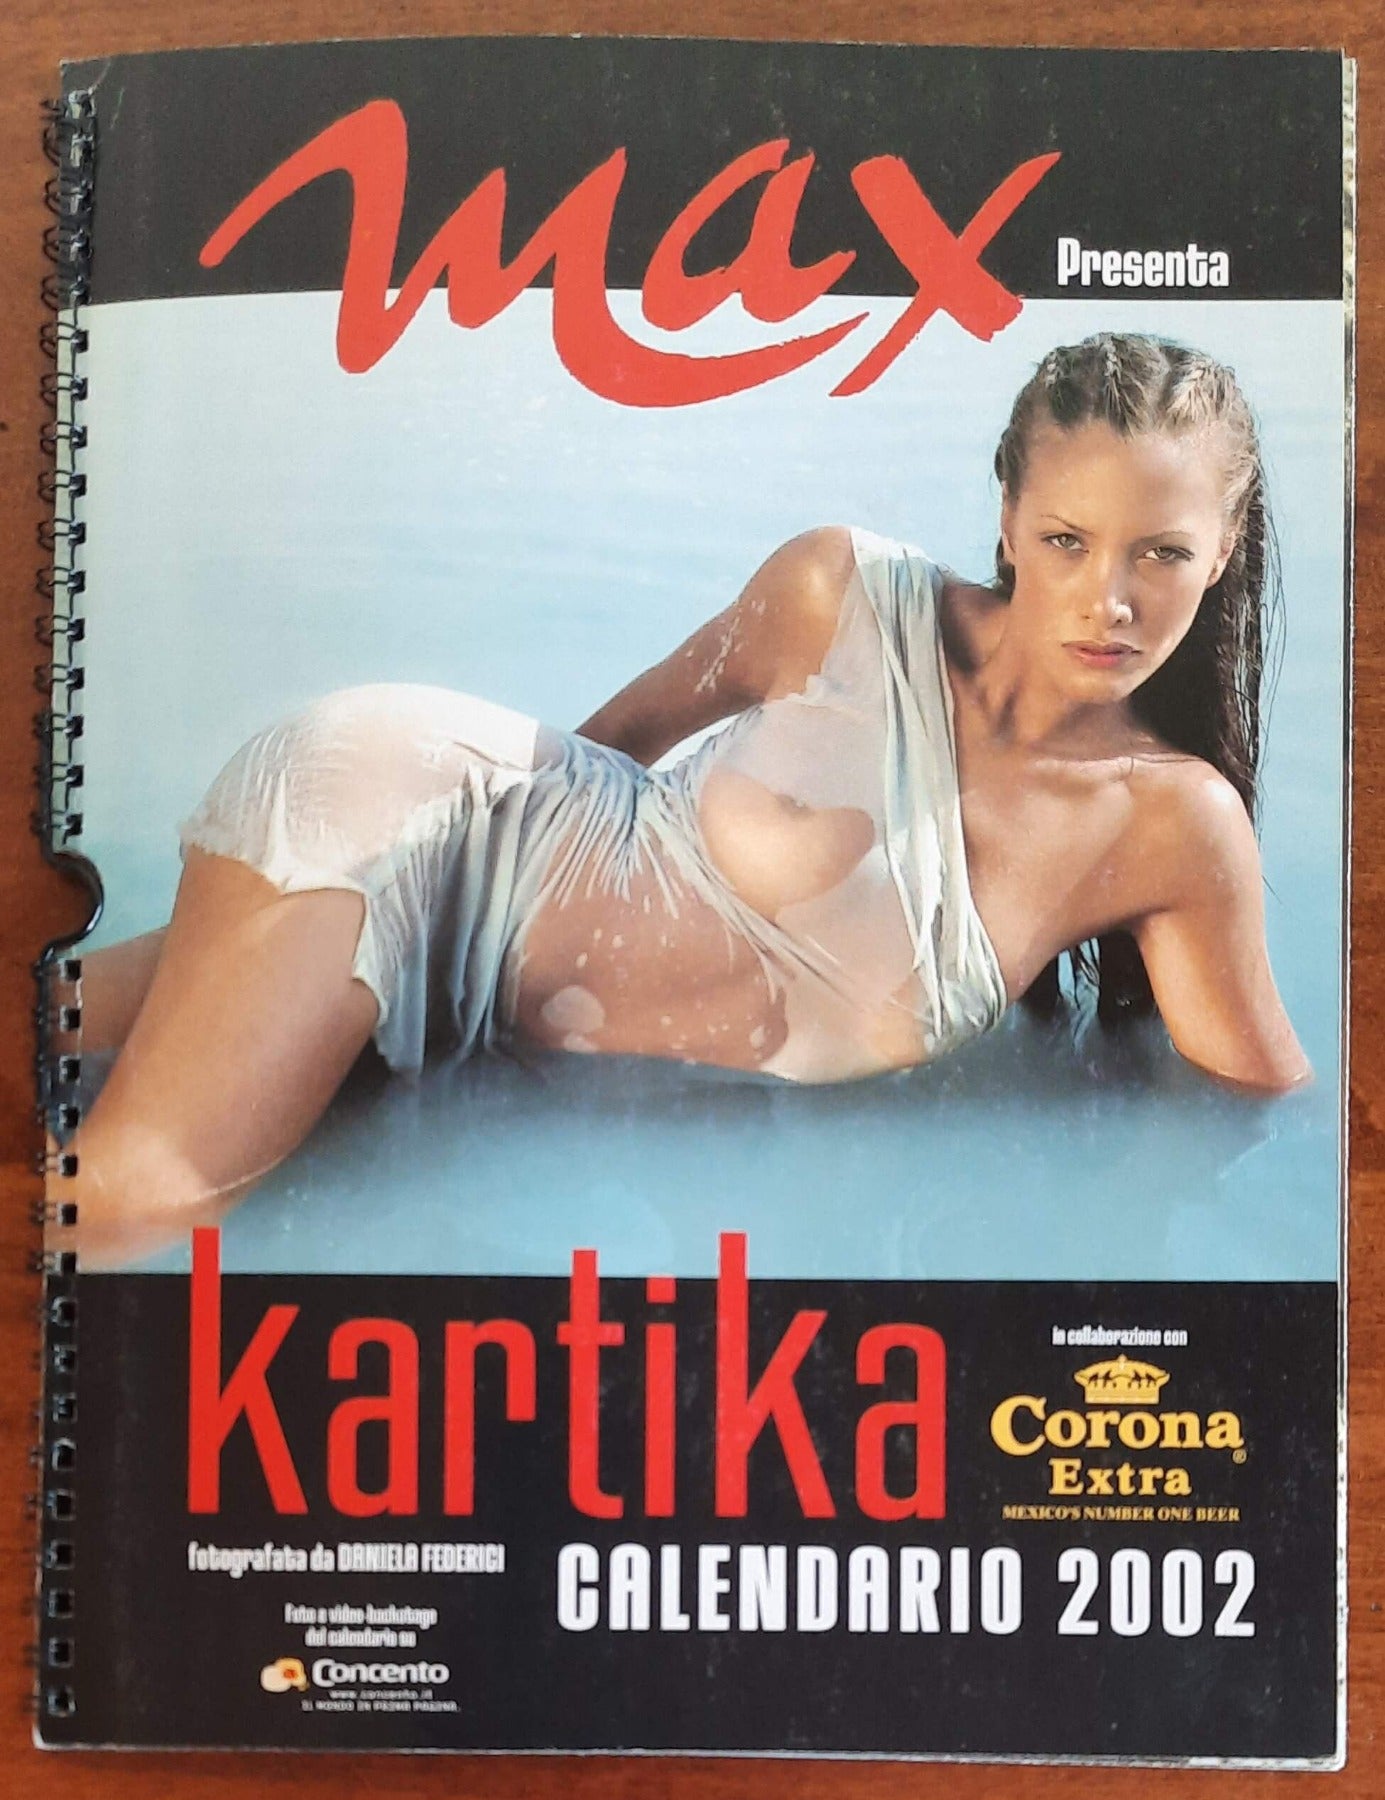 Max presenta Kartika Luyet CALENDARIO 2002